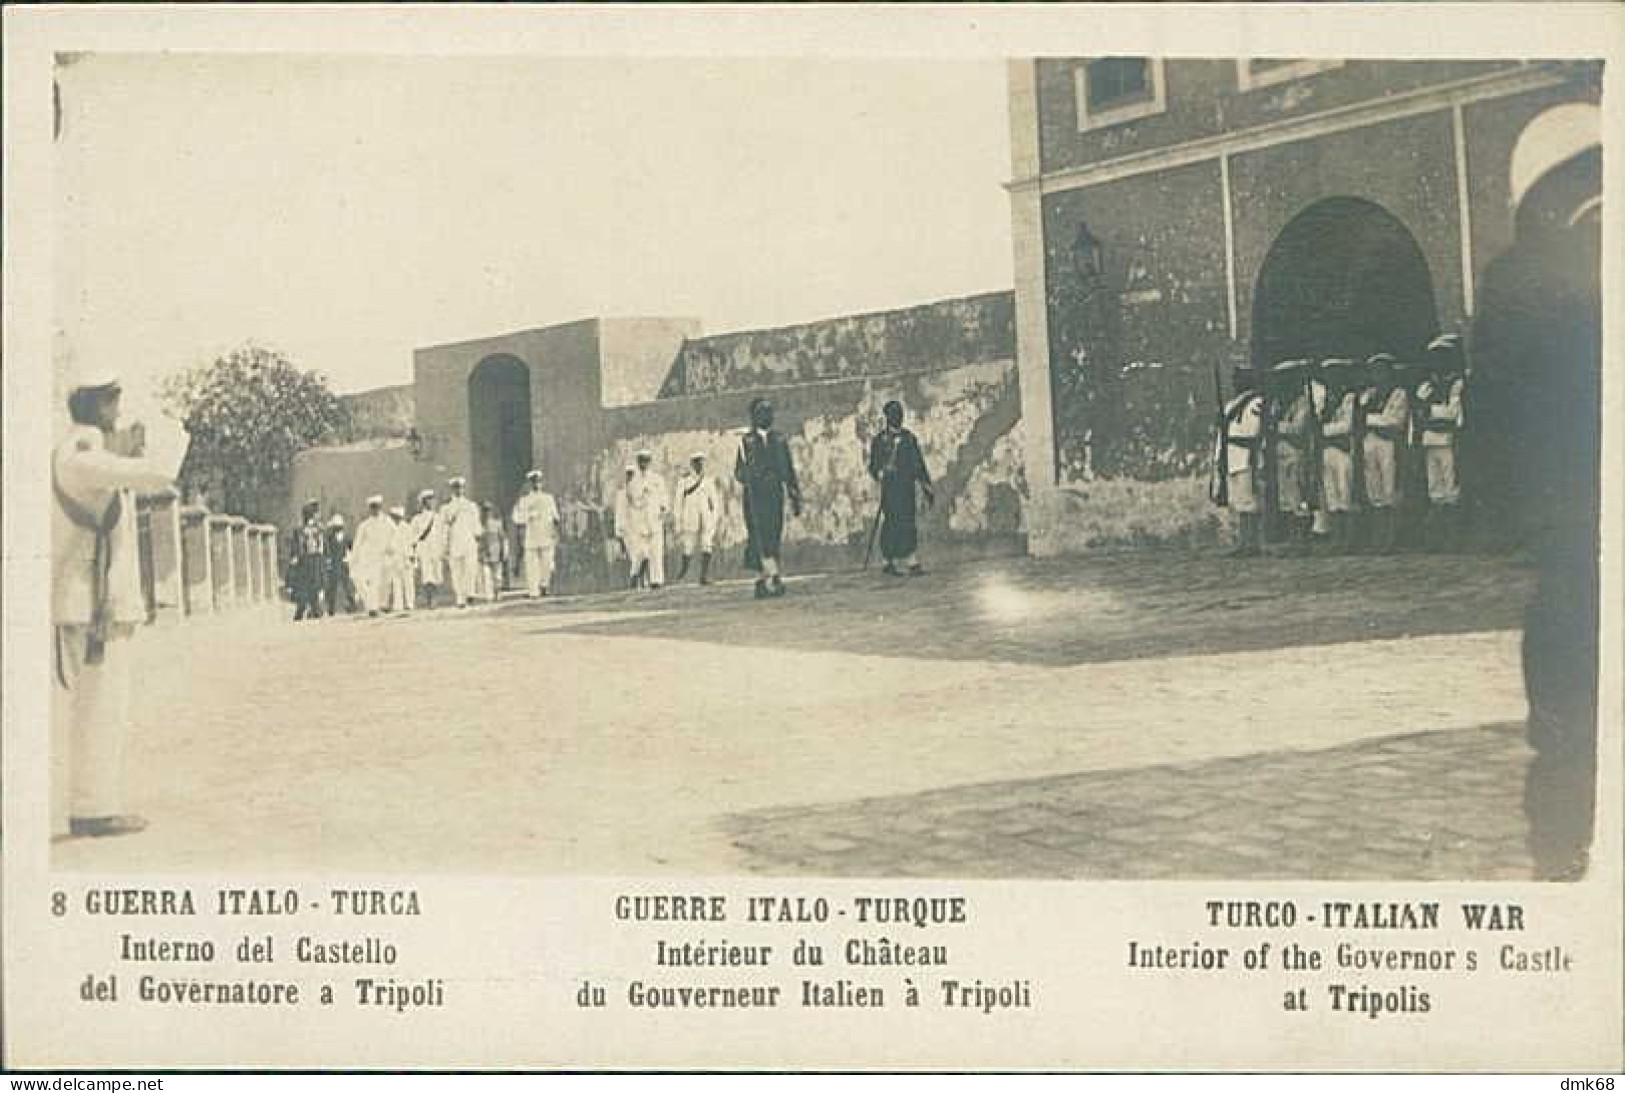 LIBYA / LIBIA - TURKEY / ITALY WAR - INTERIOR OF THE GOVERNOR'S CASTLE AT TRIPOLI - RPPC POSTCARD 1910s (12596) - Libia